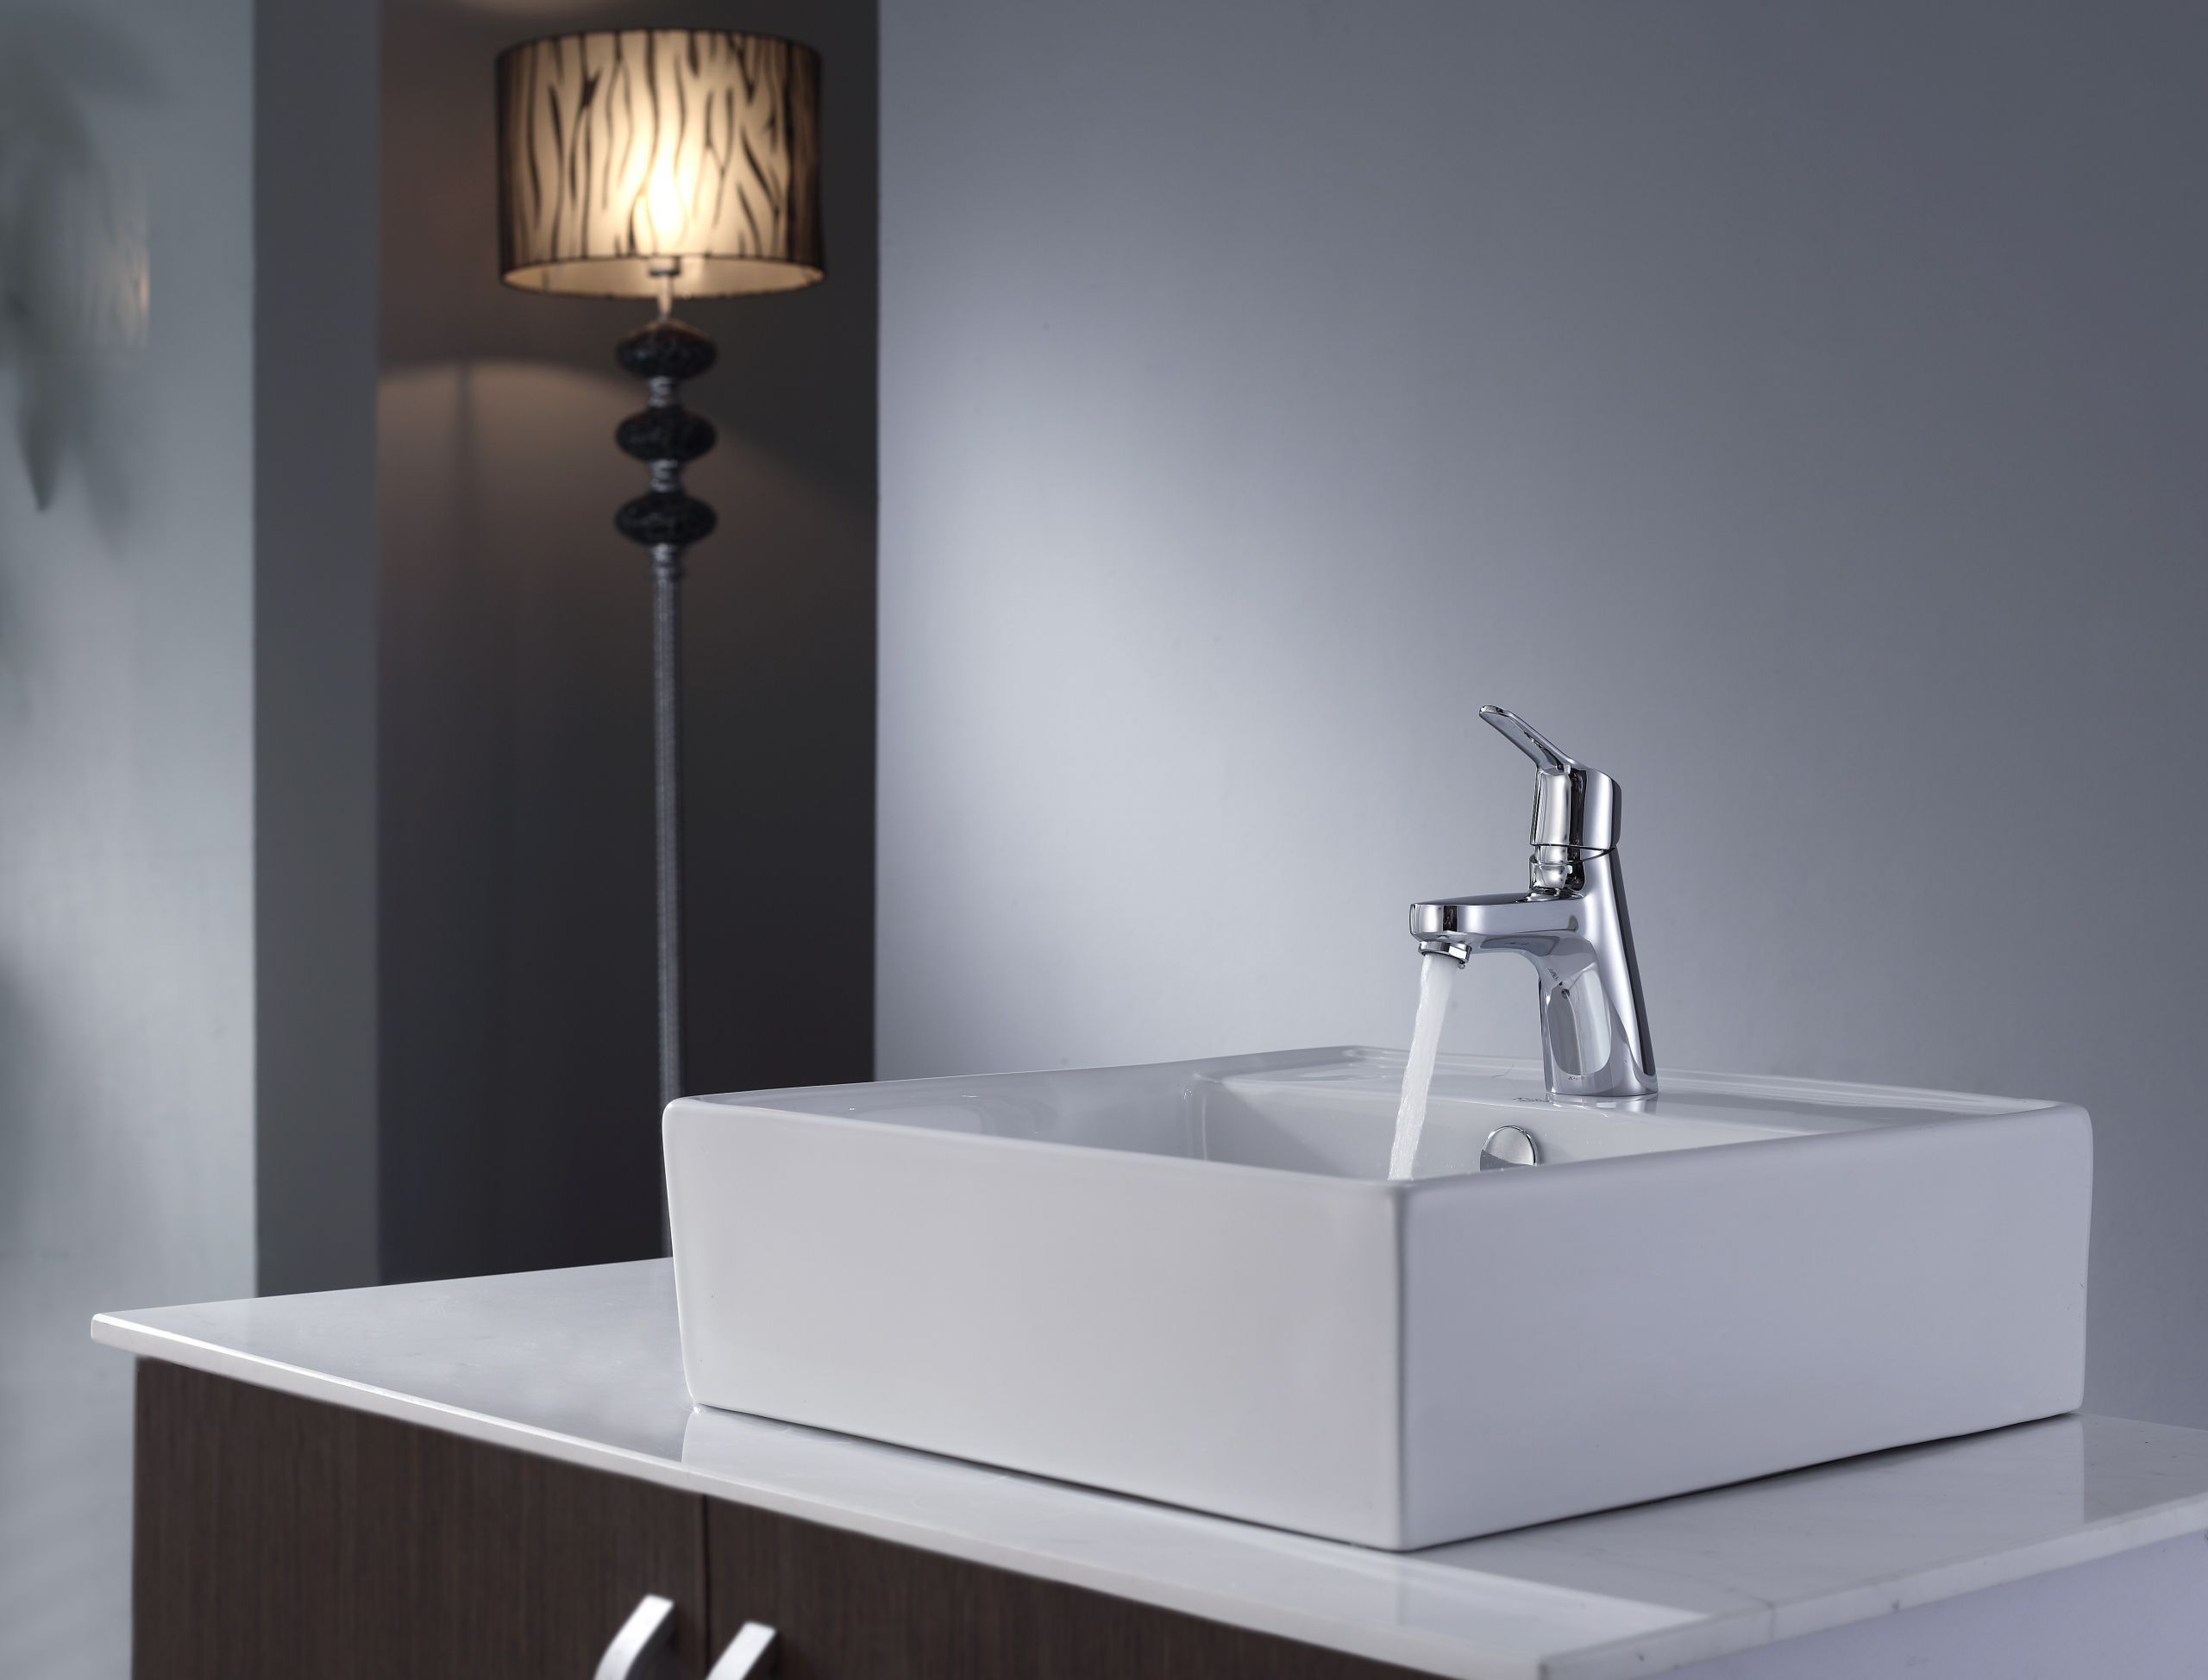 Designer Bathroom Sinks
 21 Ceramic Sink Design Ideas For Kitchen and Bathroom